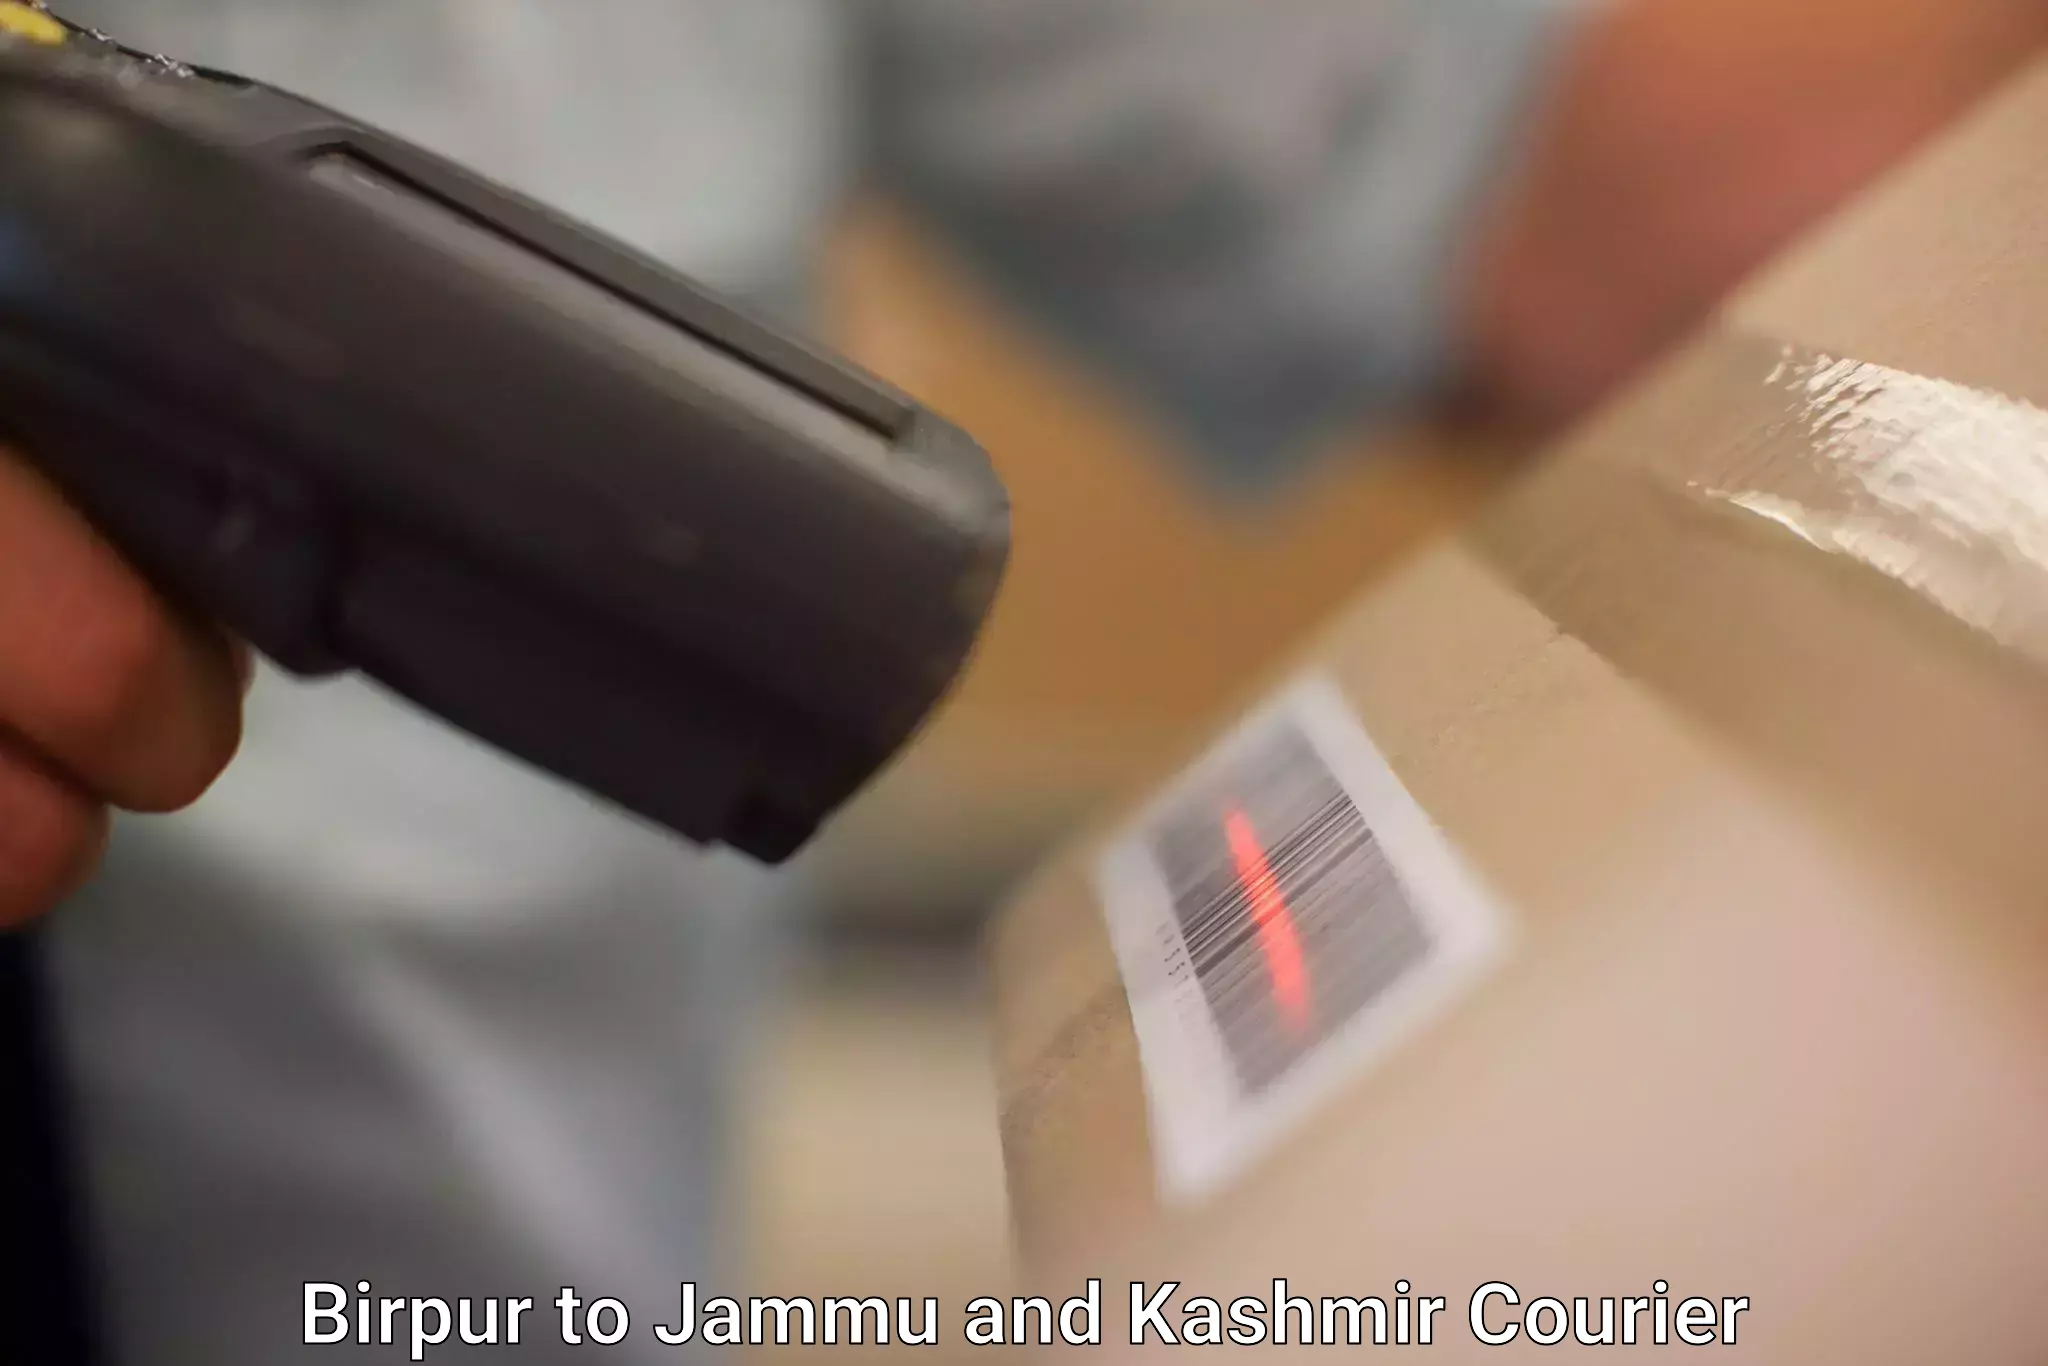 Urban courier service Birpur to Srinagar Kashmir